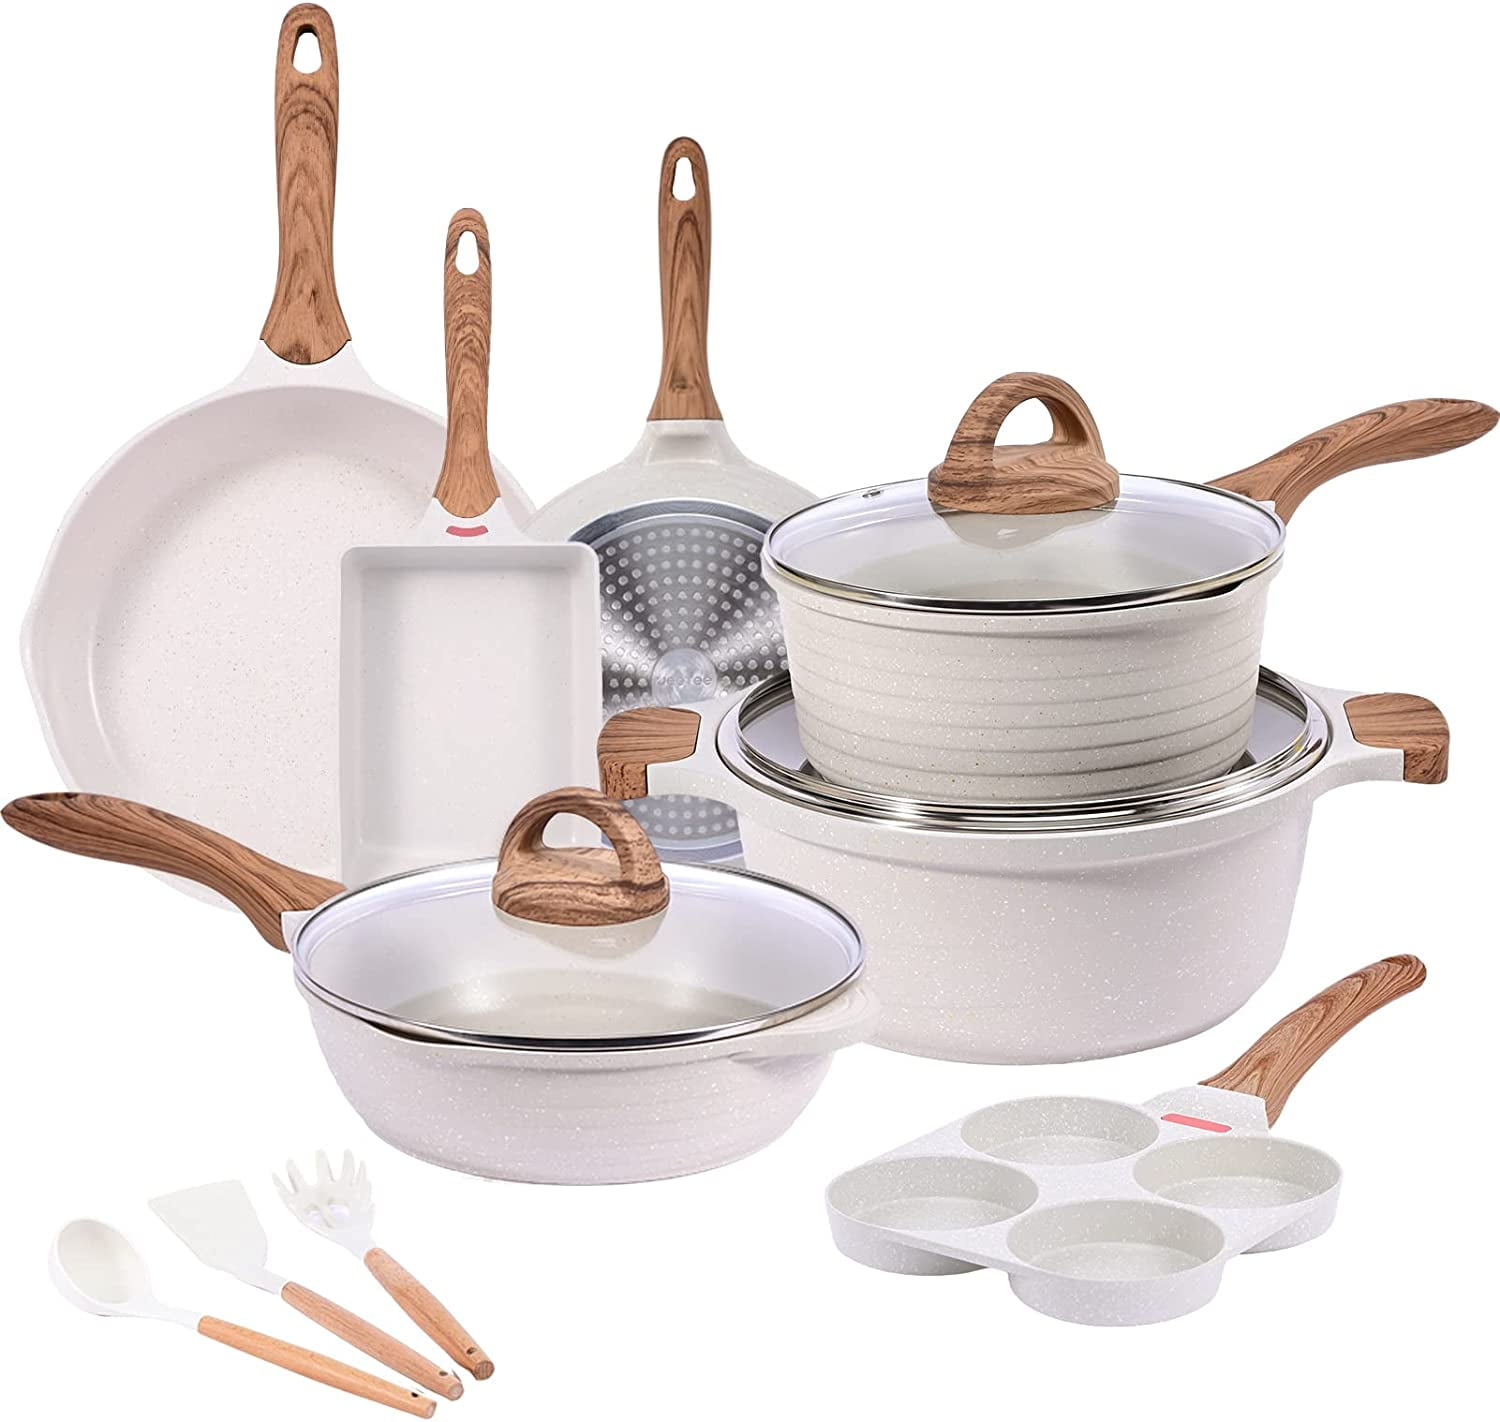 JEETEE 23pcs Pots and Pans Set Nonstick, White Granite Coating Cookware  Sets for Kitchen, w/Frying Pan, Saucepan, Sauté Pan, Griddle Pan, Crepe  Pan